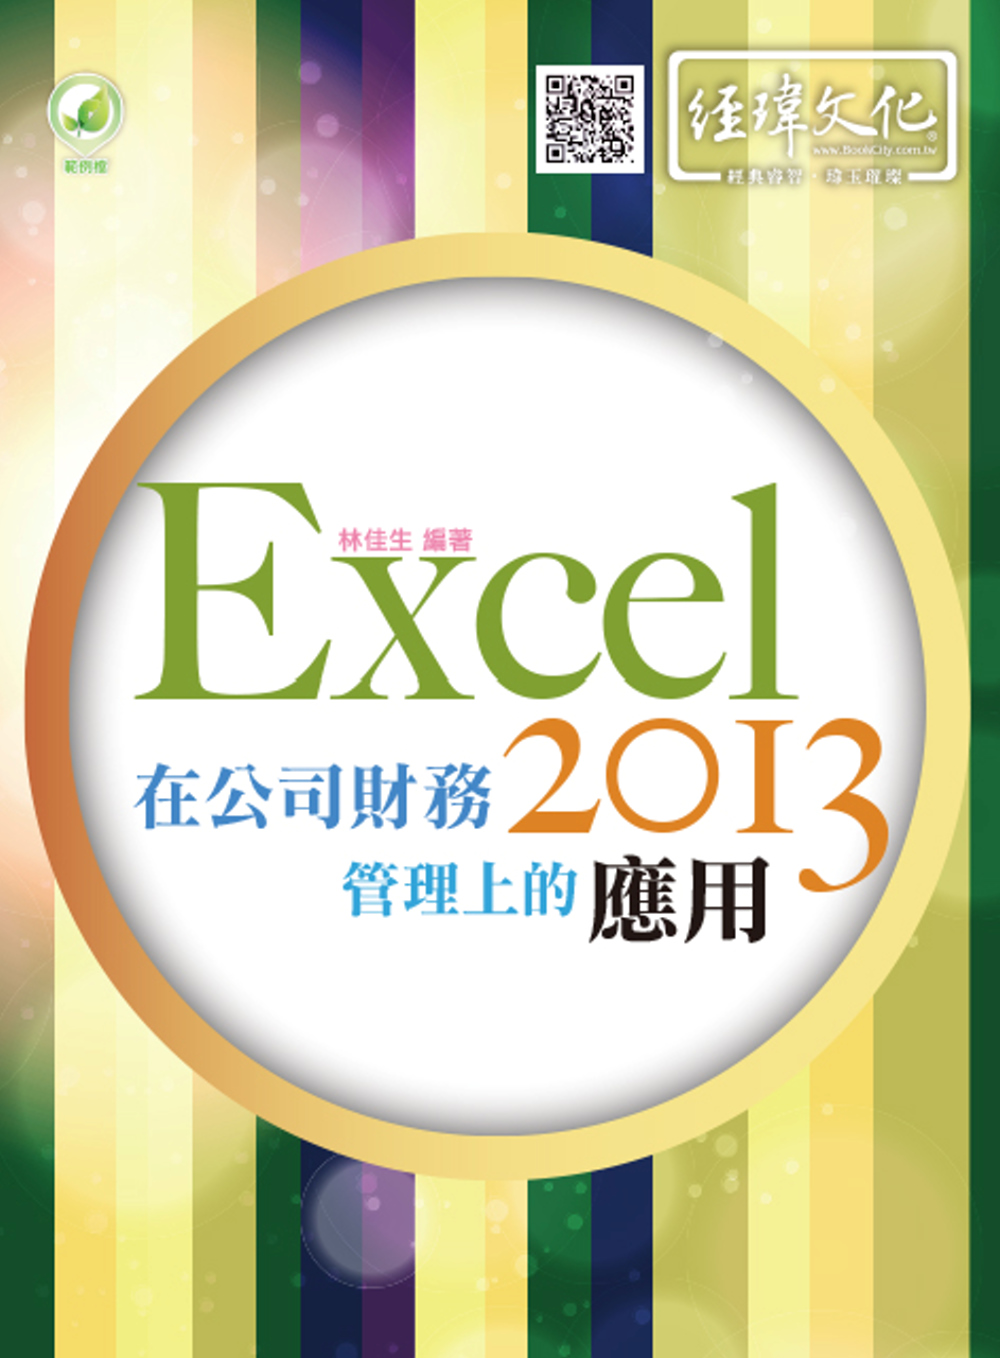 Excel 2013 在公司財務管理上的應用(附綠色範例檔)